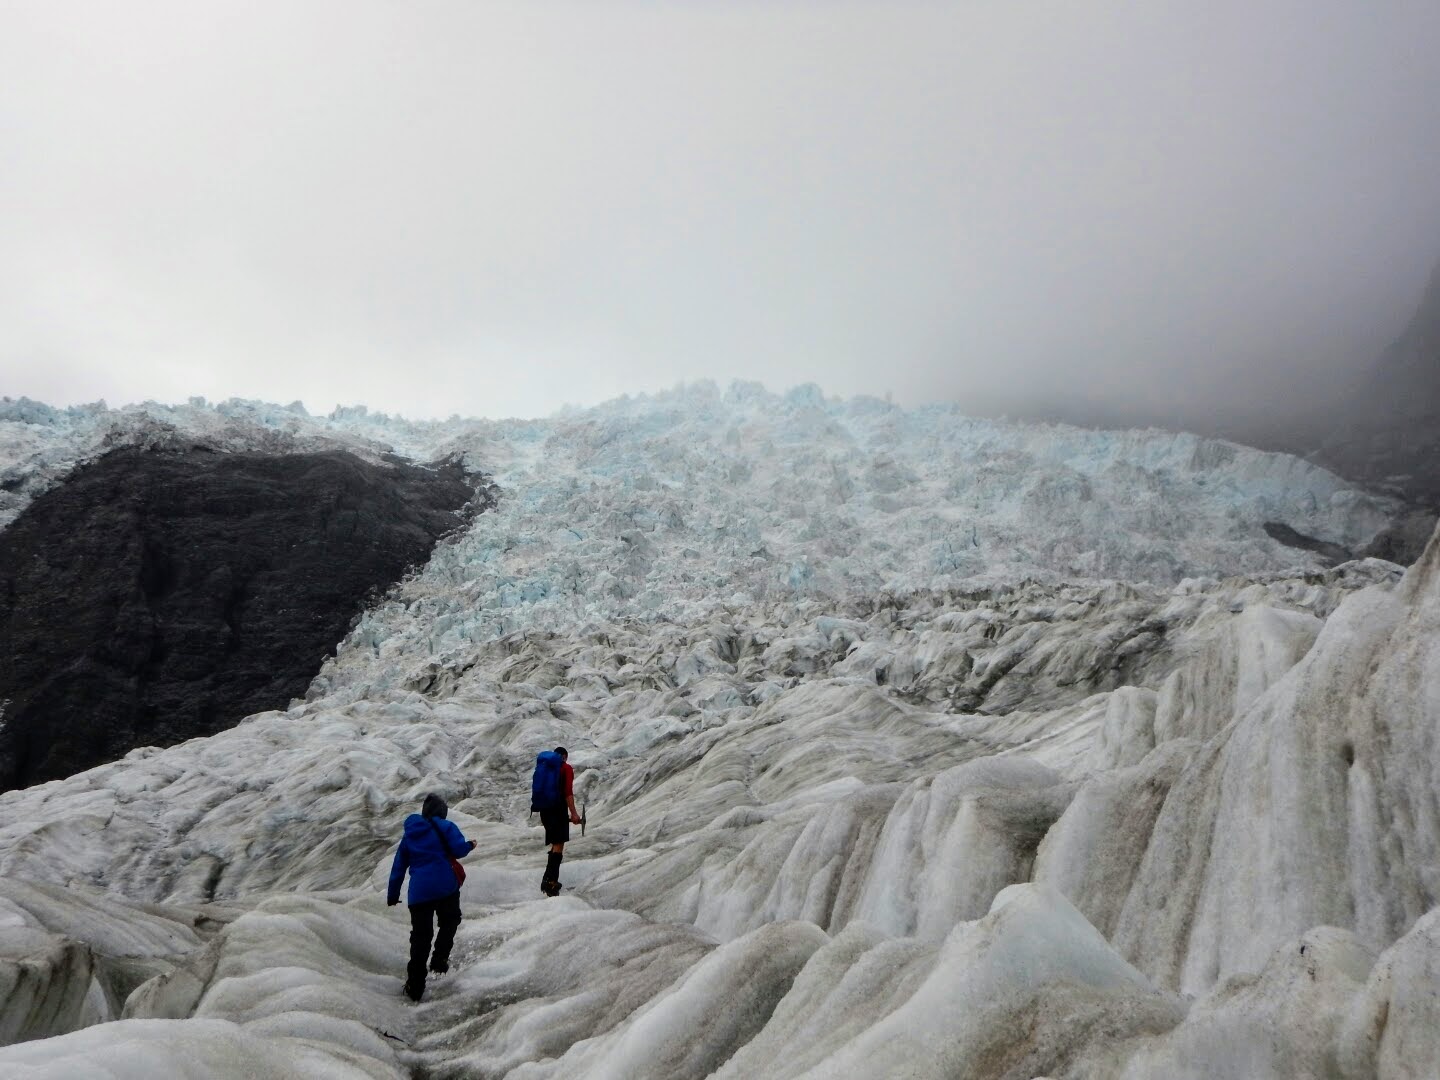 Franz Josef glacier stretching above us